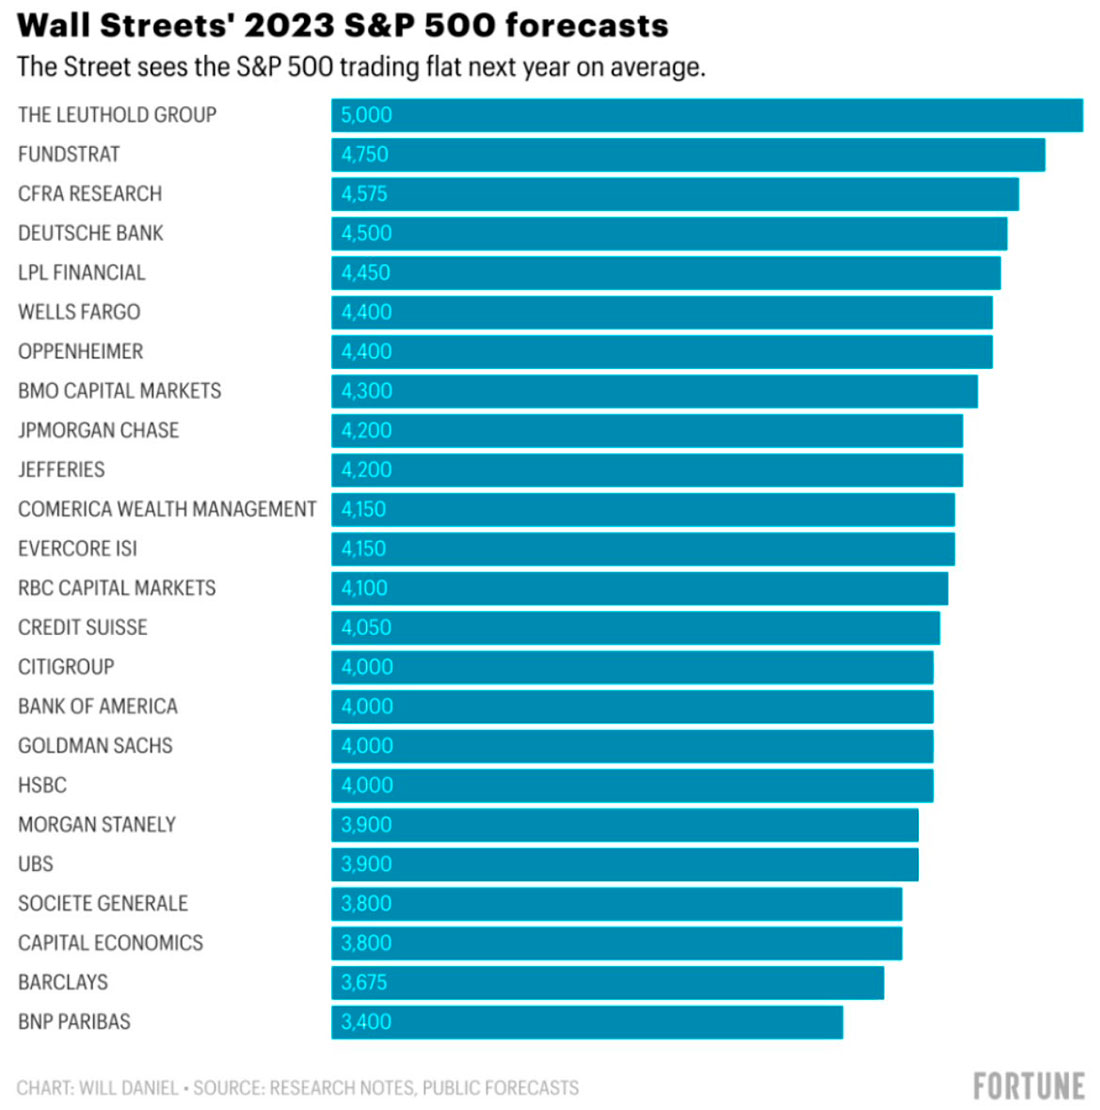 Прогнозы банков и агентств по S&P 500 на 2023 год